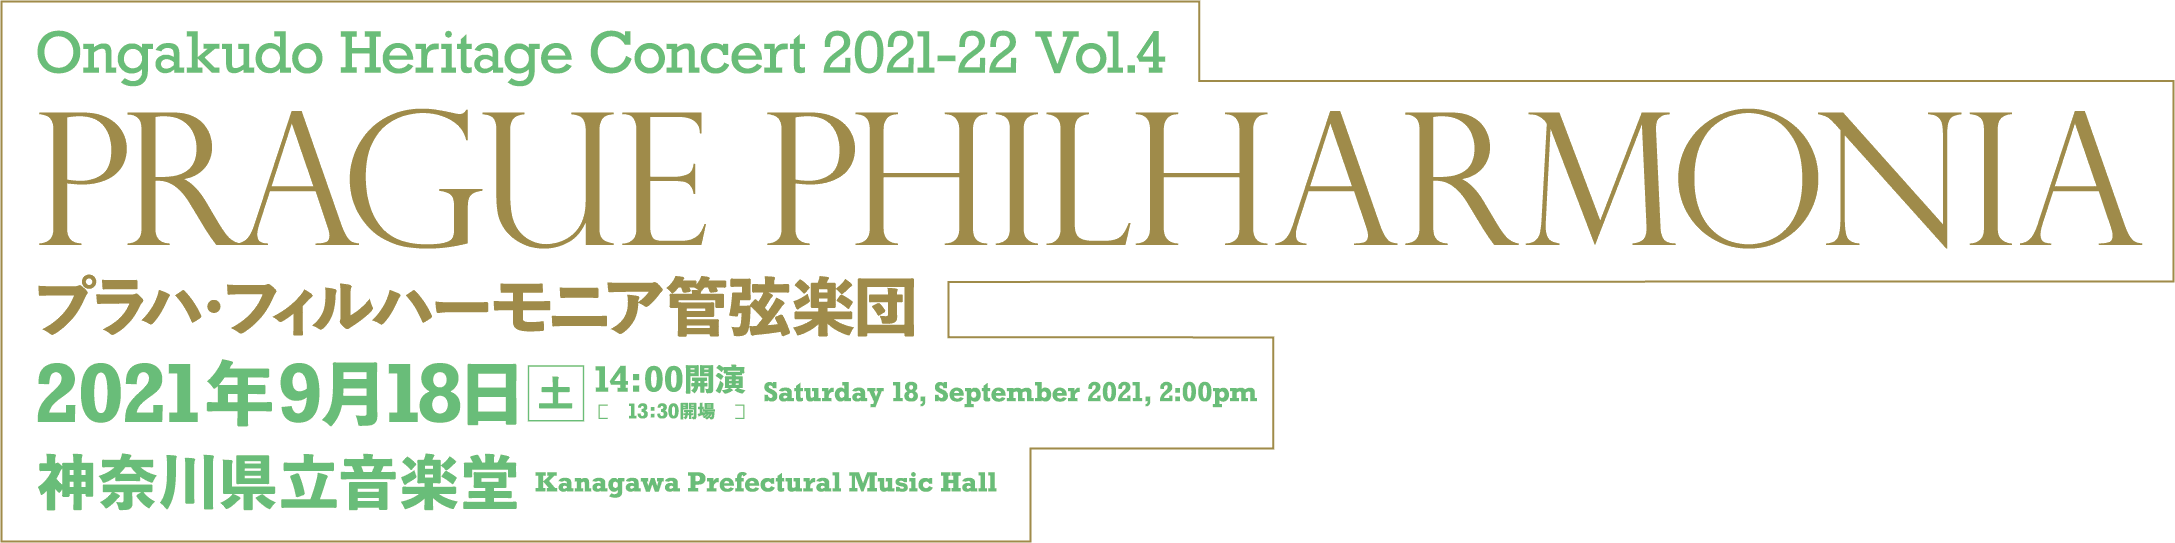 Ongakudo Heritage Concert 2021-22 Vol.4 Prague Philharmonia